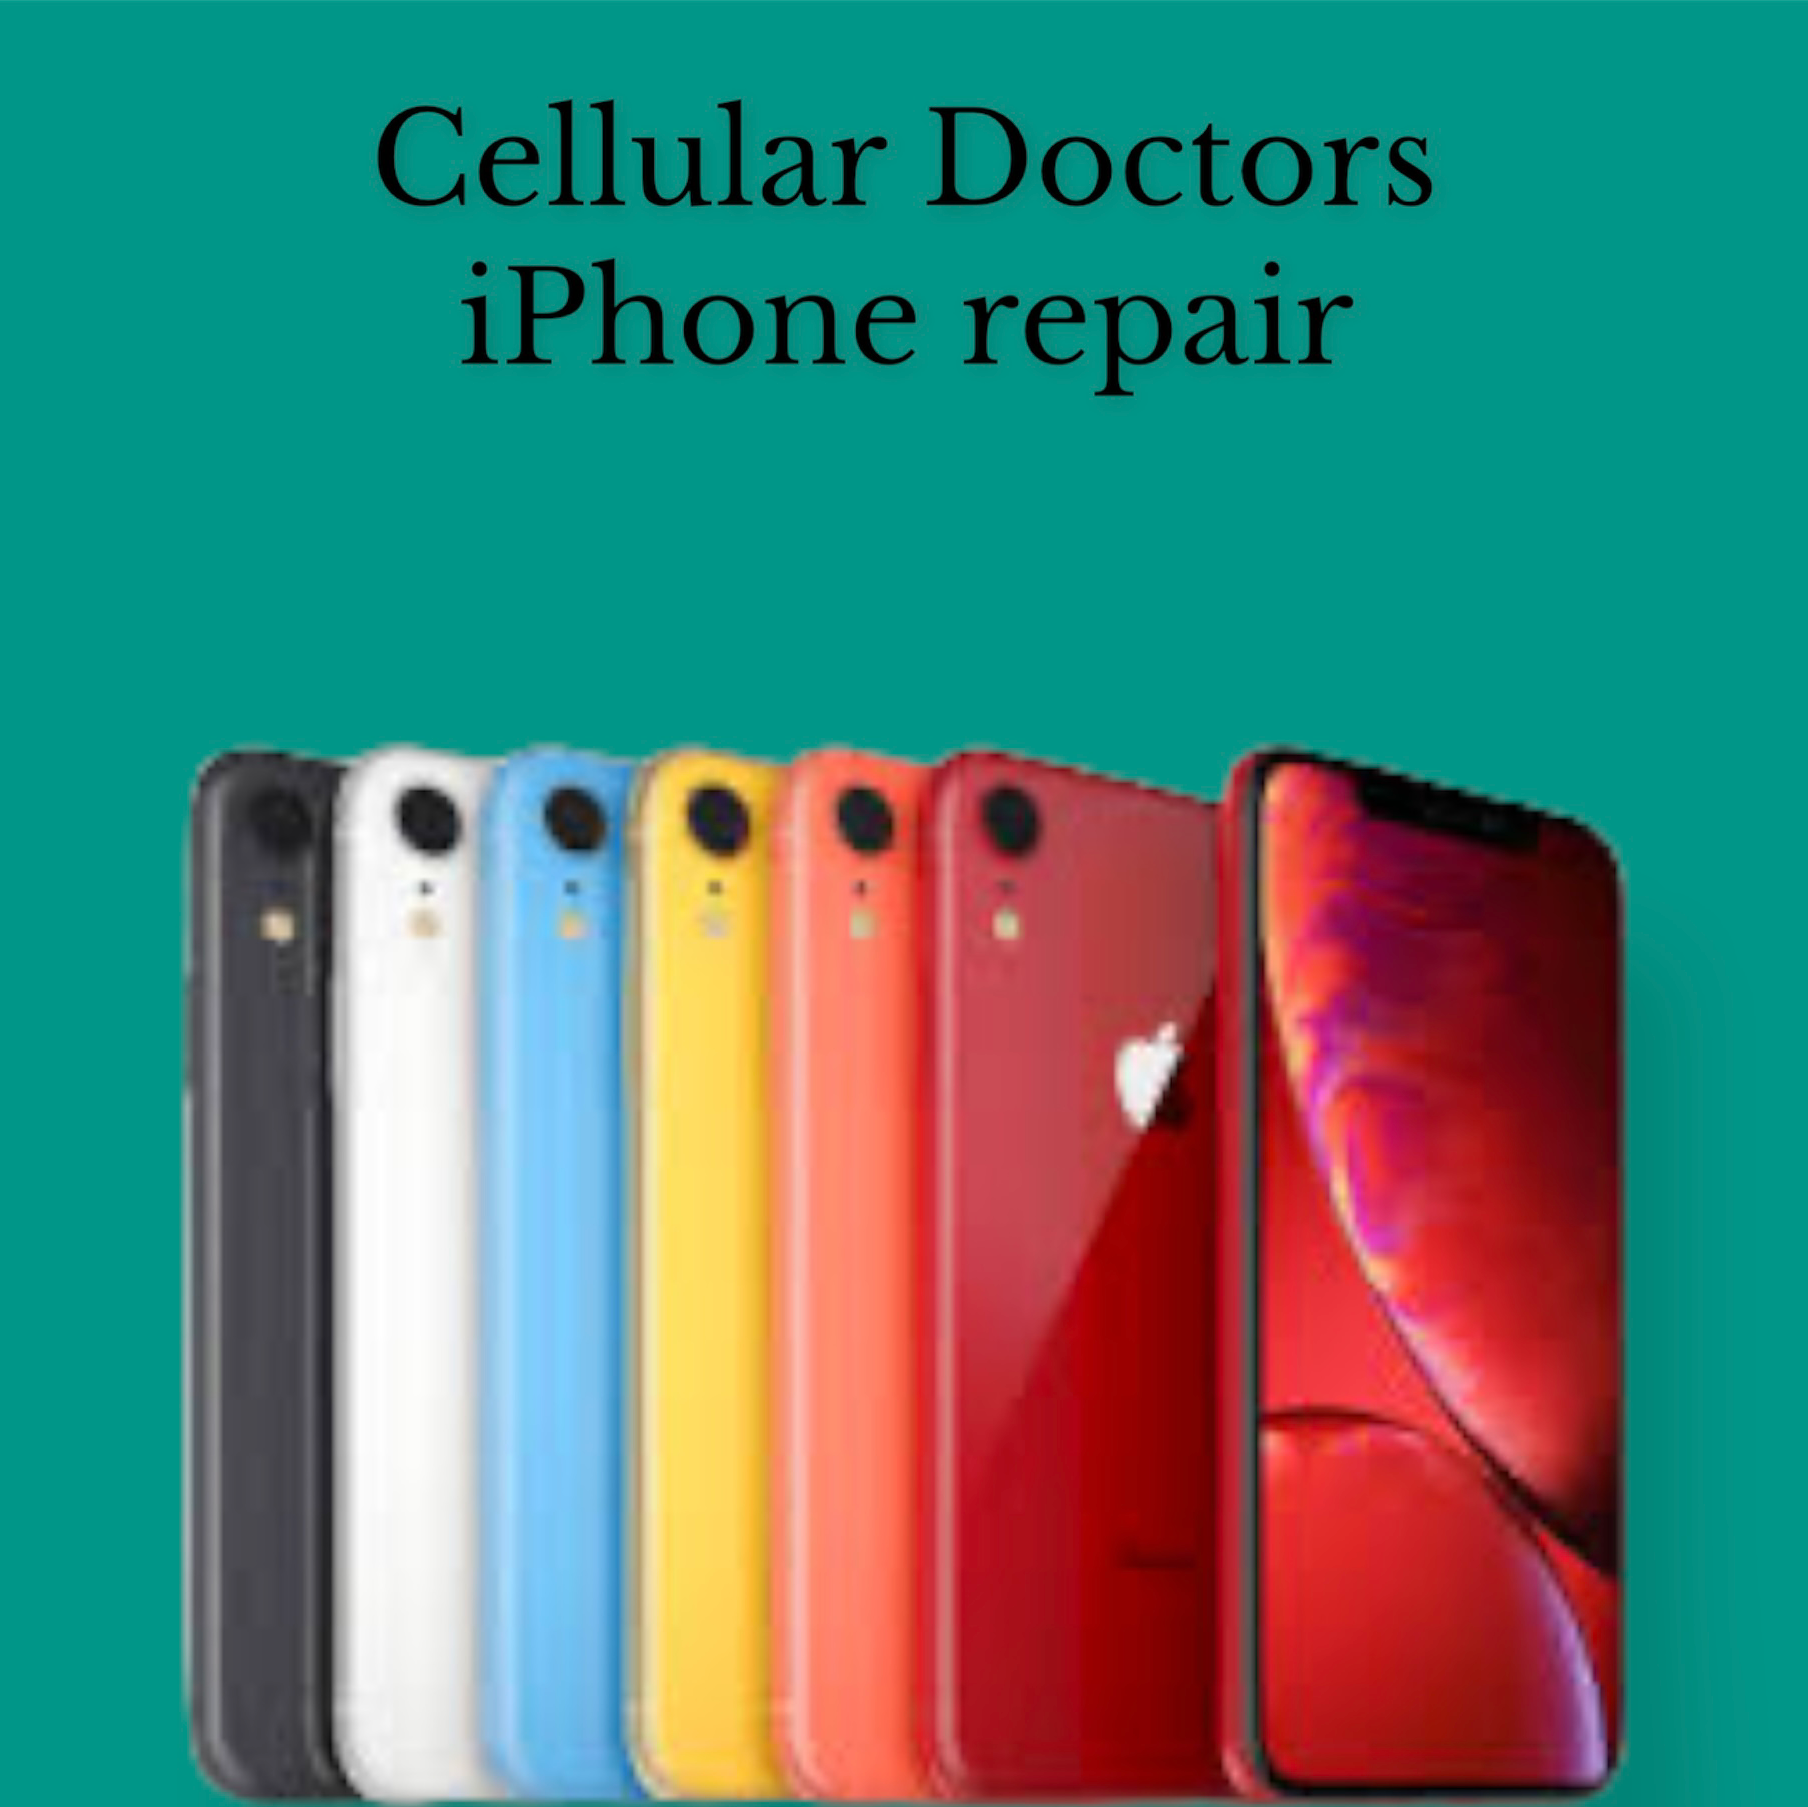 Cellular Doctors